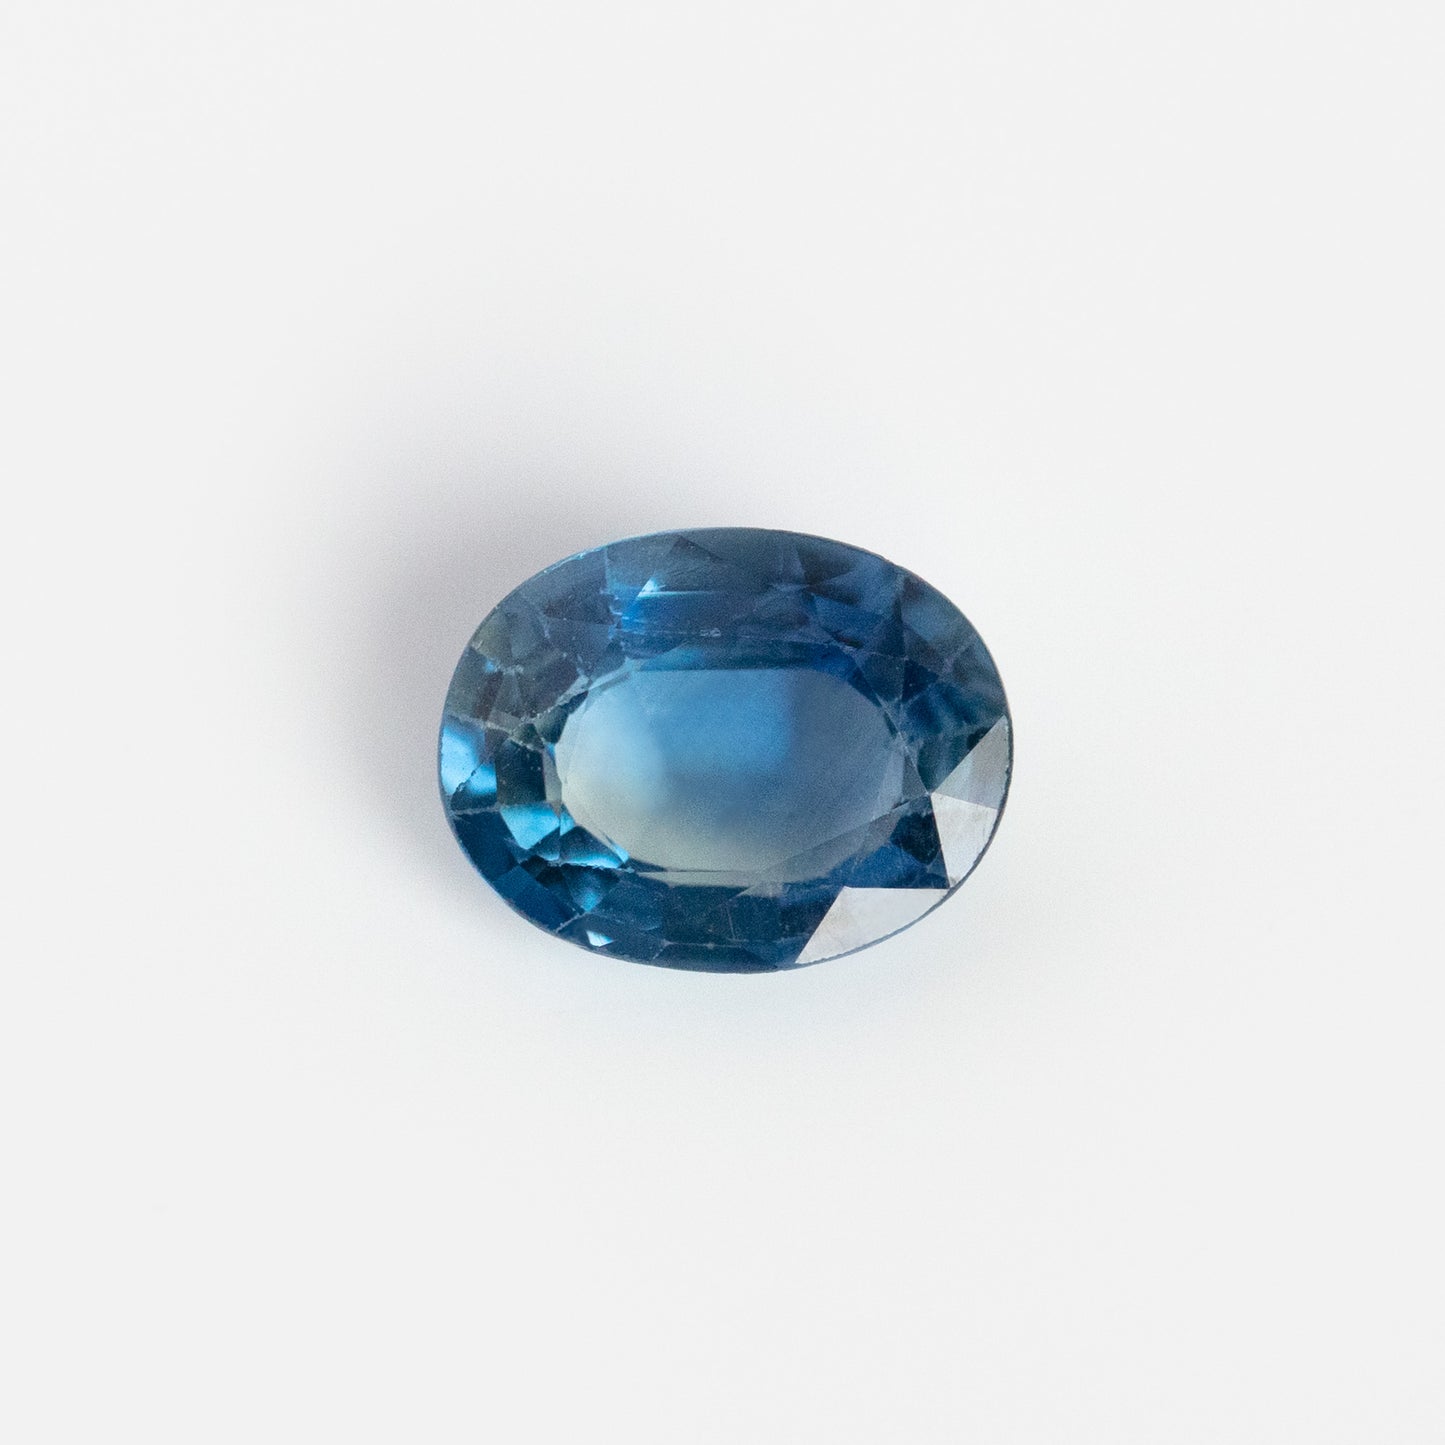 Oval Teal Sapphire Loose Gemstone